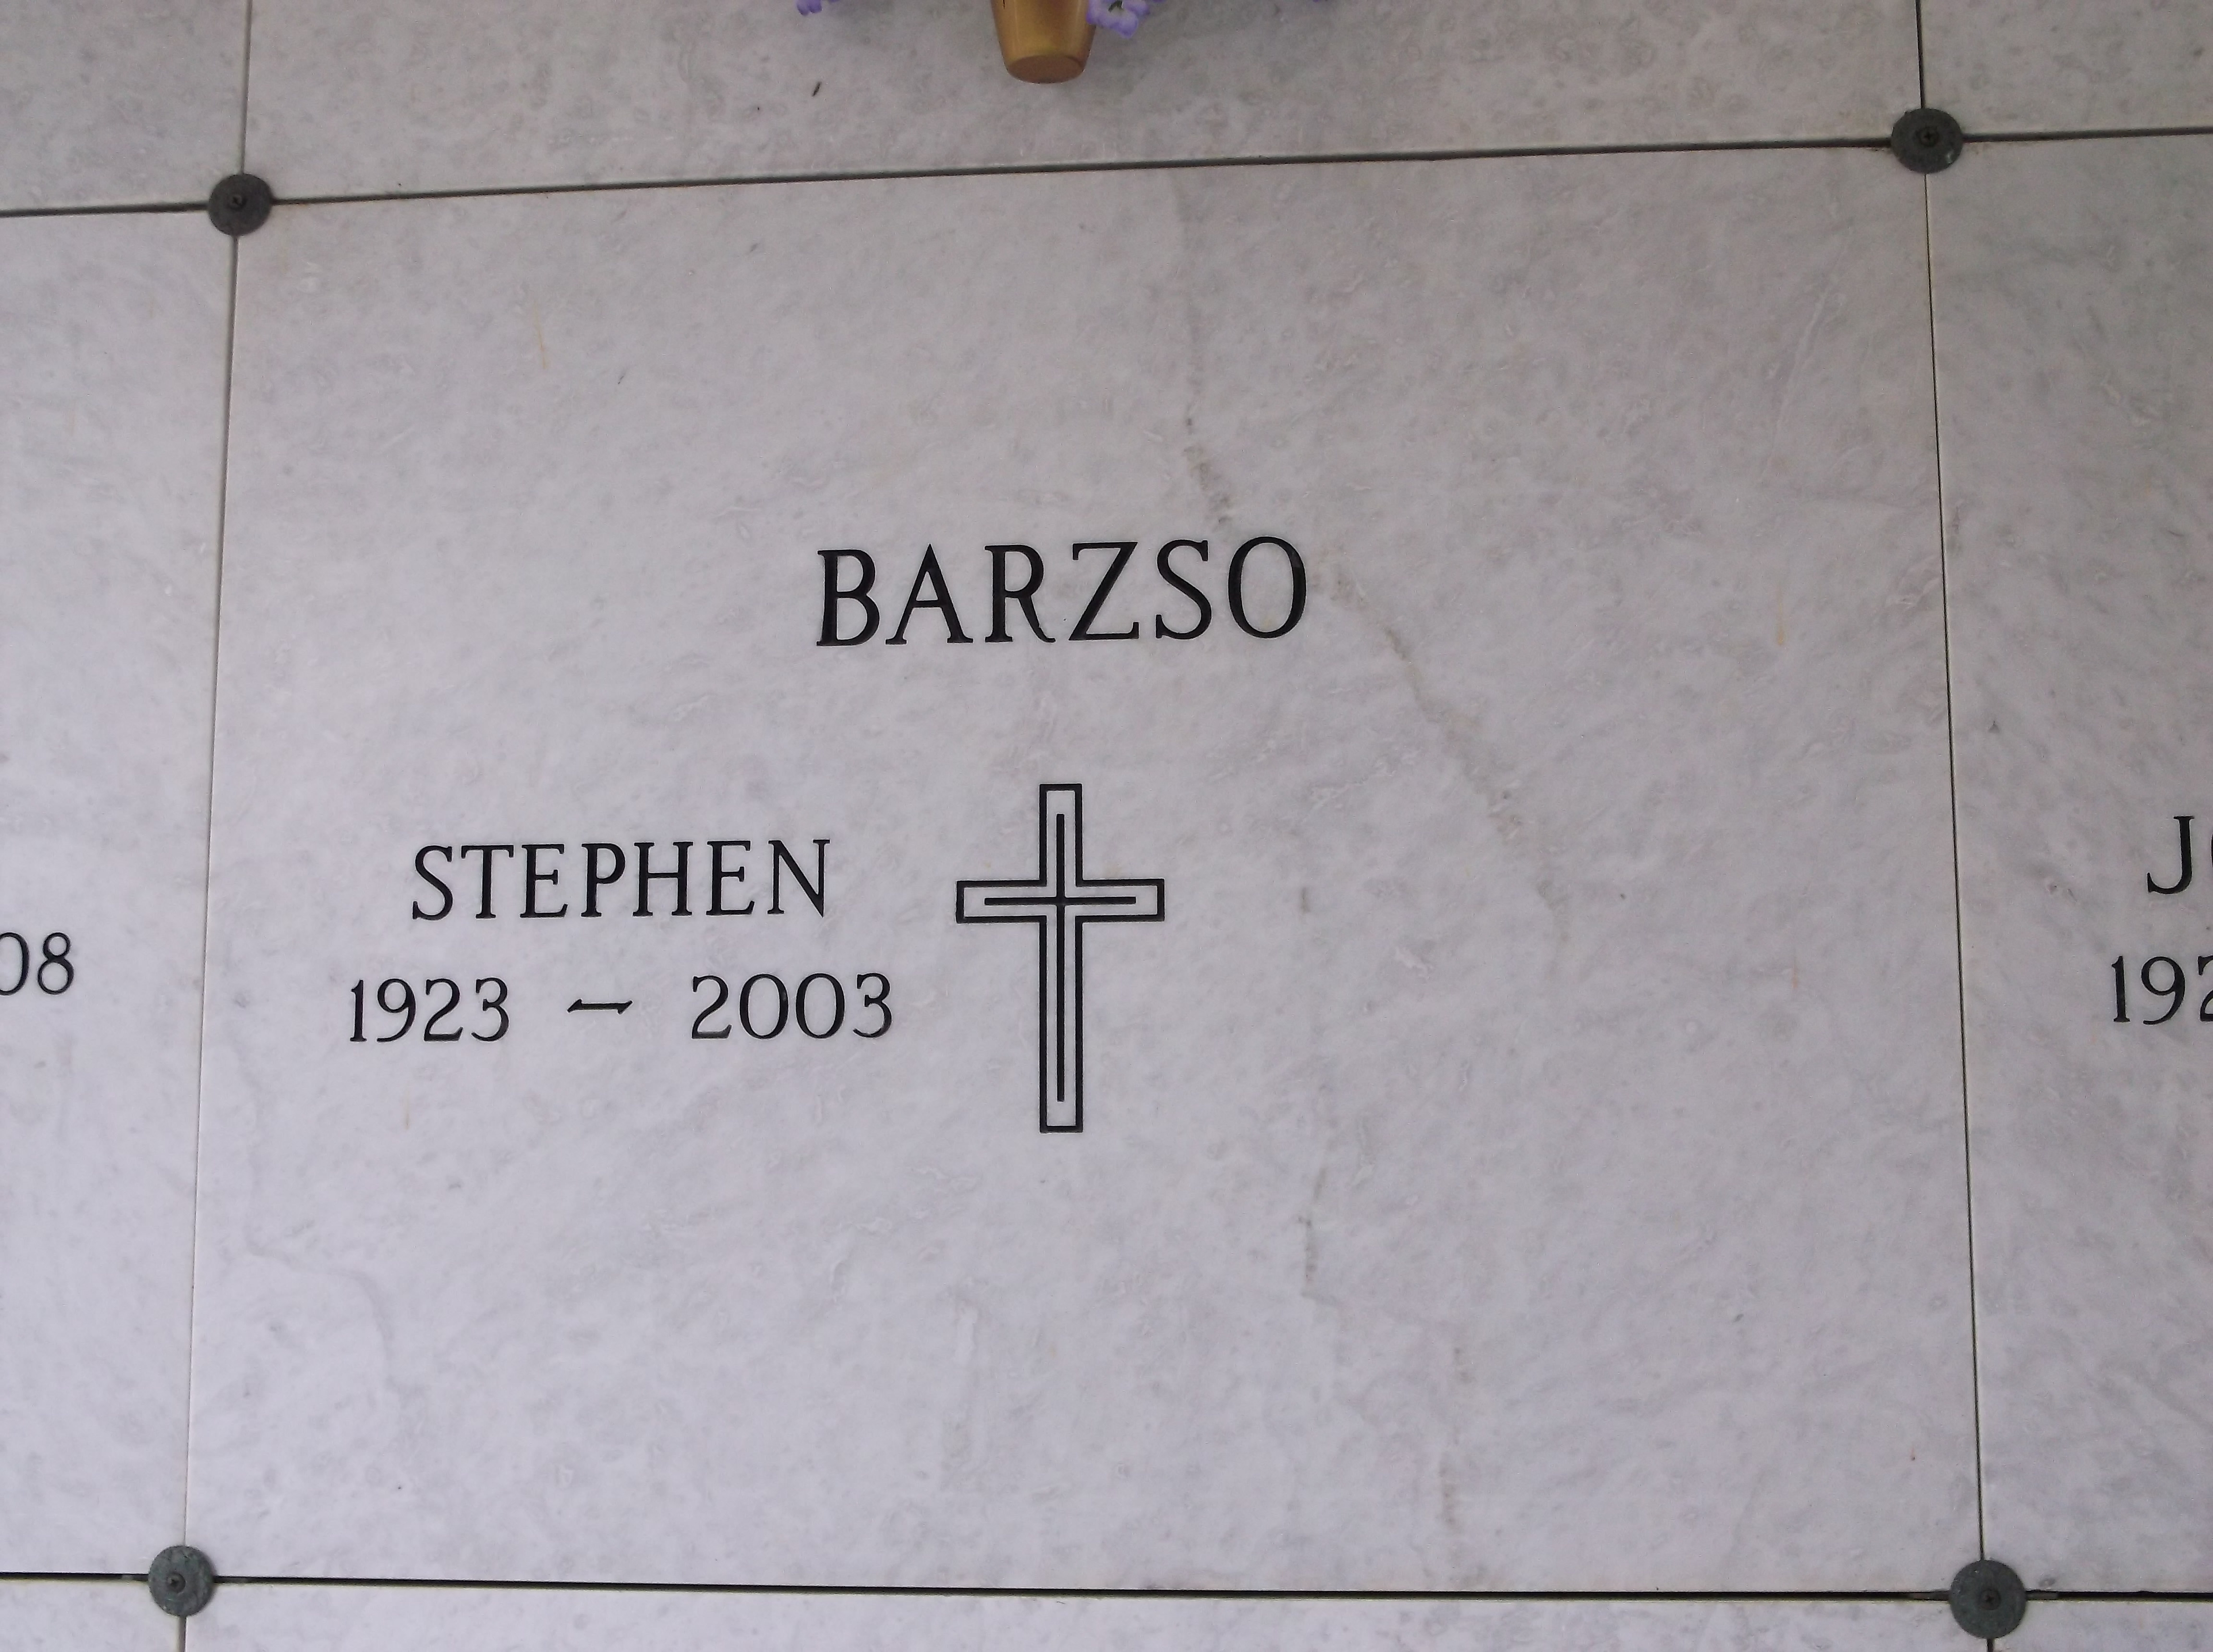 Stephen Barzso